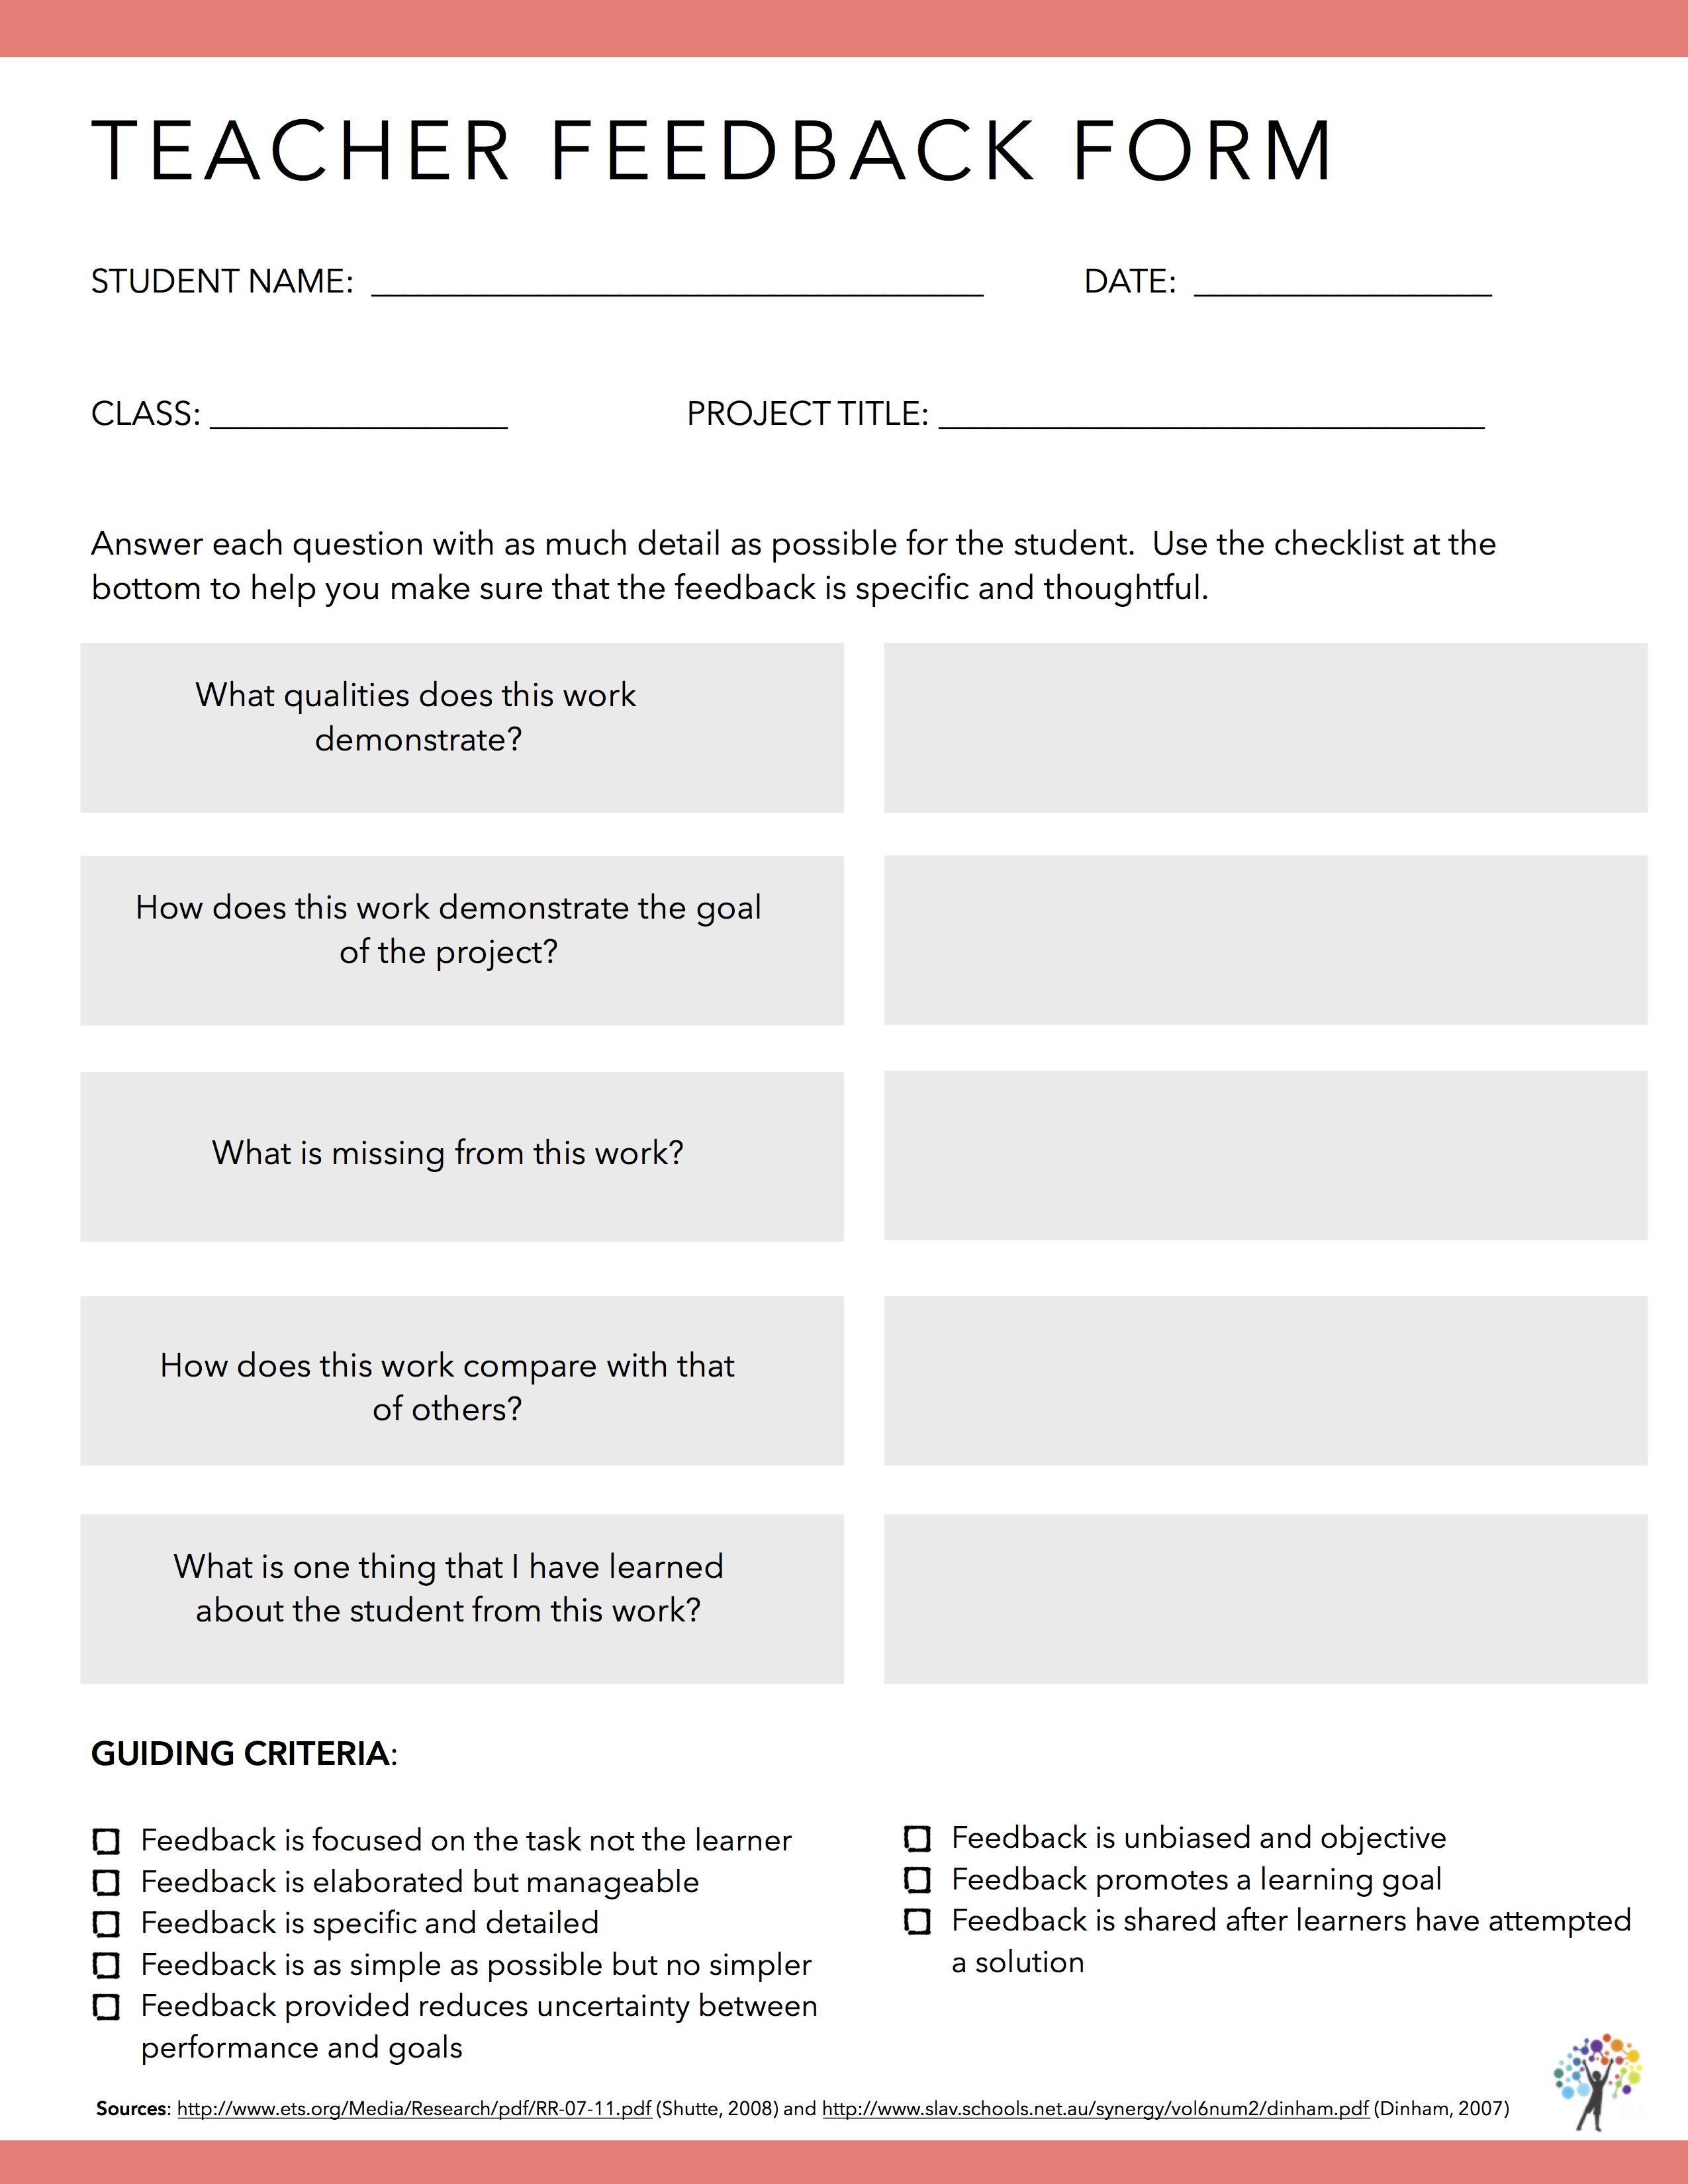 Event Feedback Form Sample Evaluation Business Html 1563135 Regarding Student Feedback Form Template Word